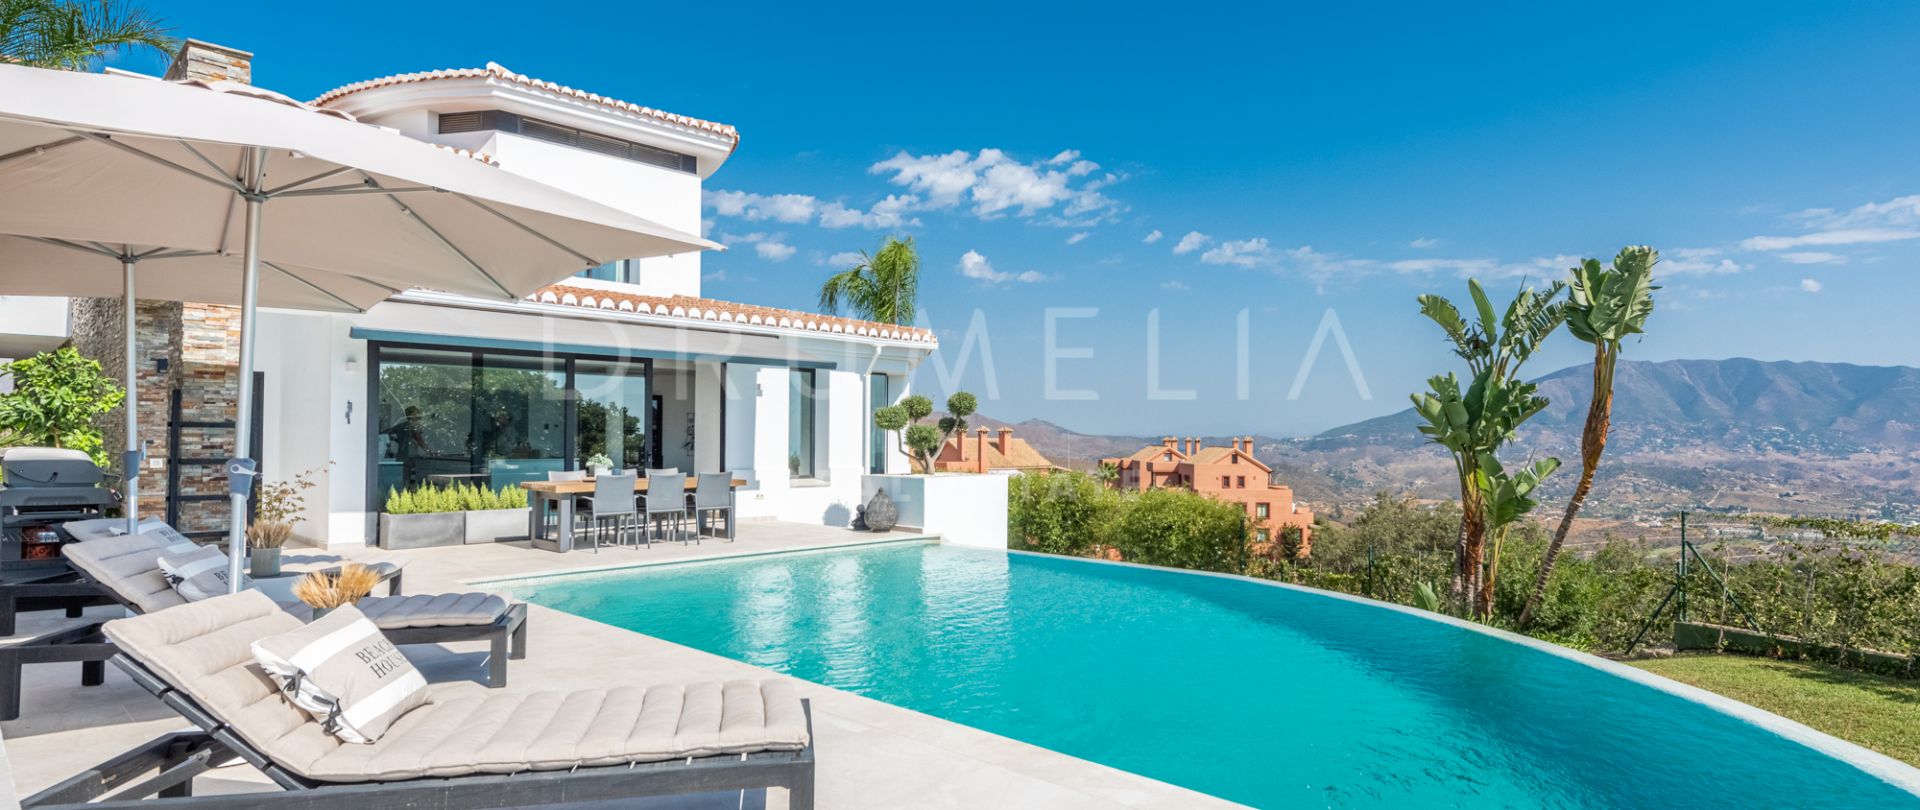 Villa for salg i La Mairena, Marbella Øst